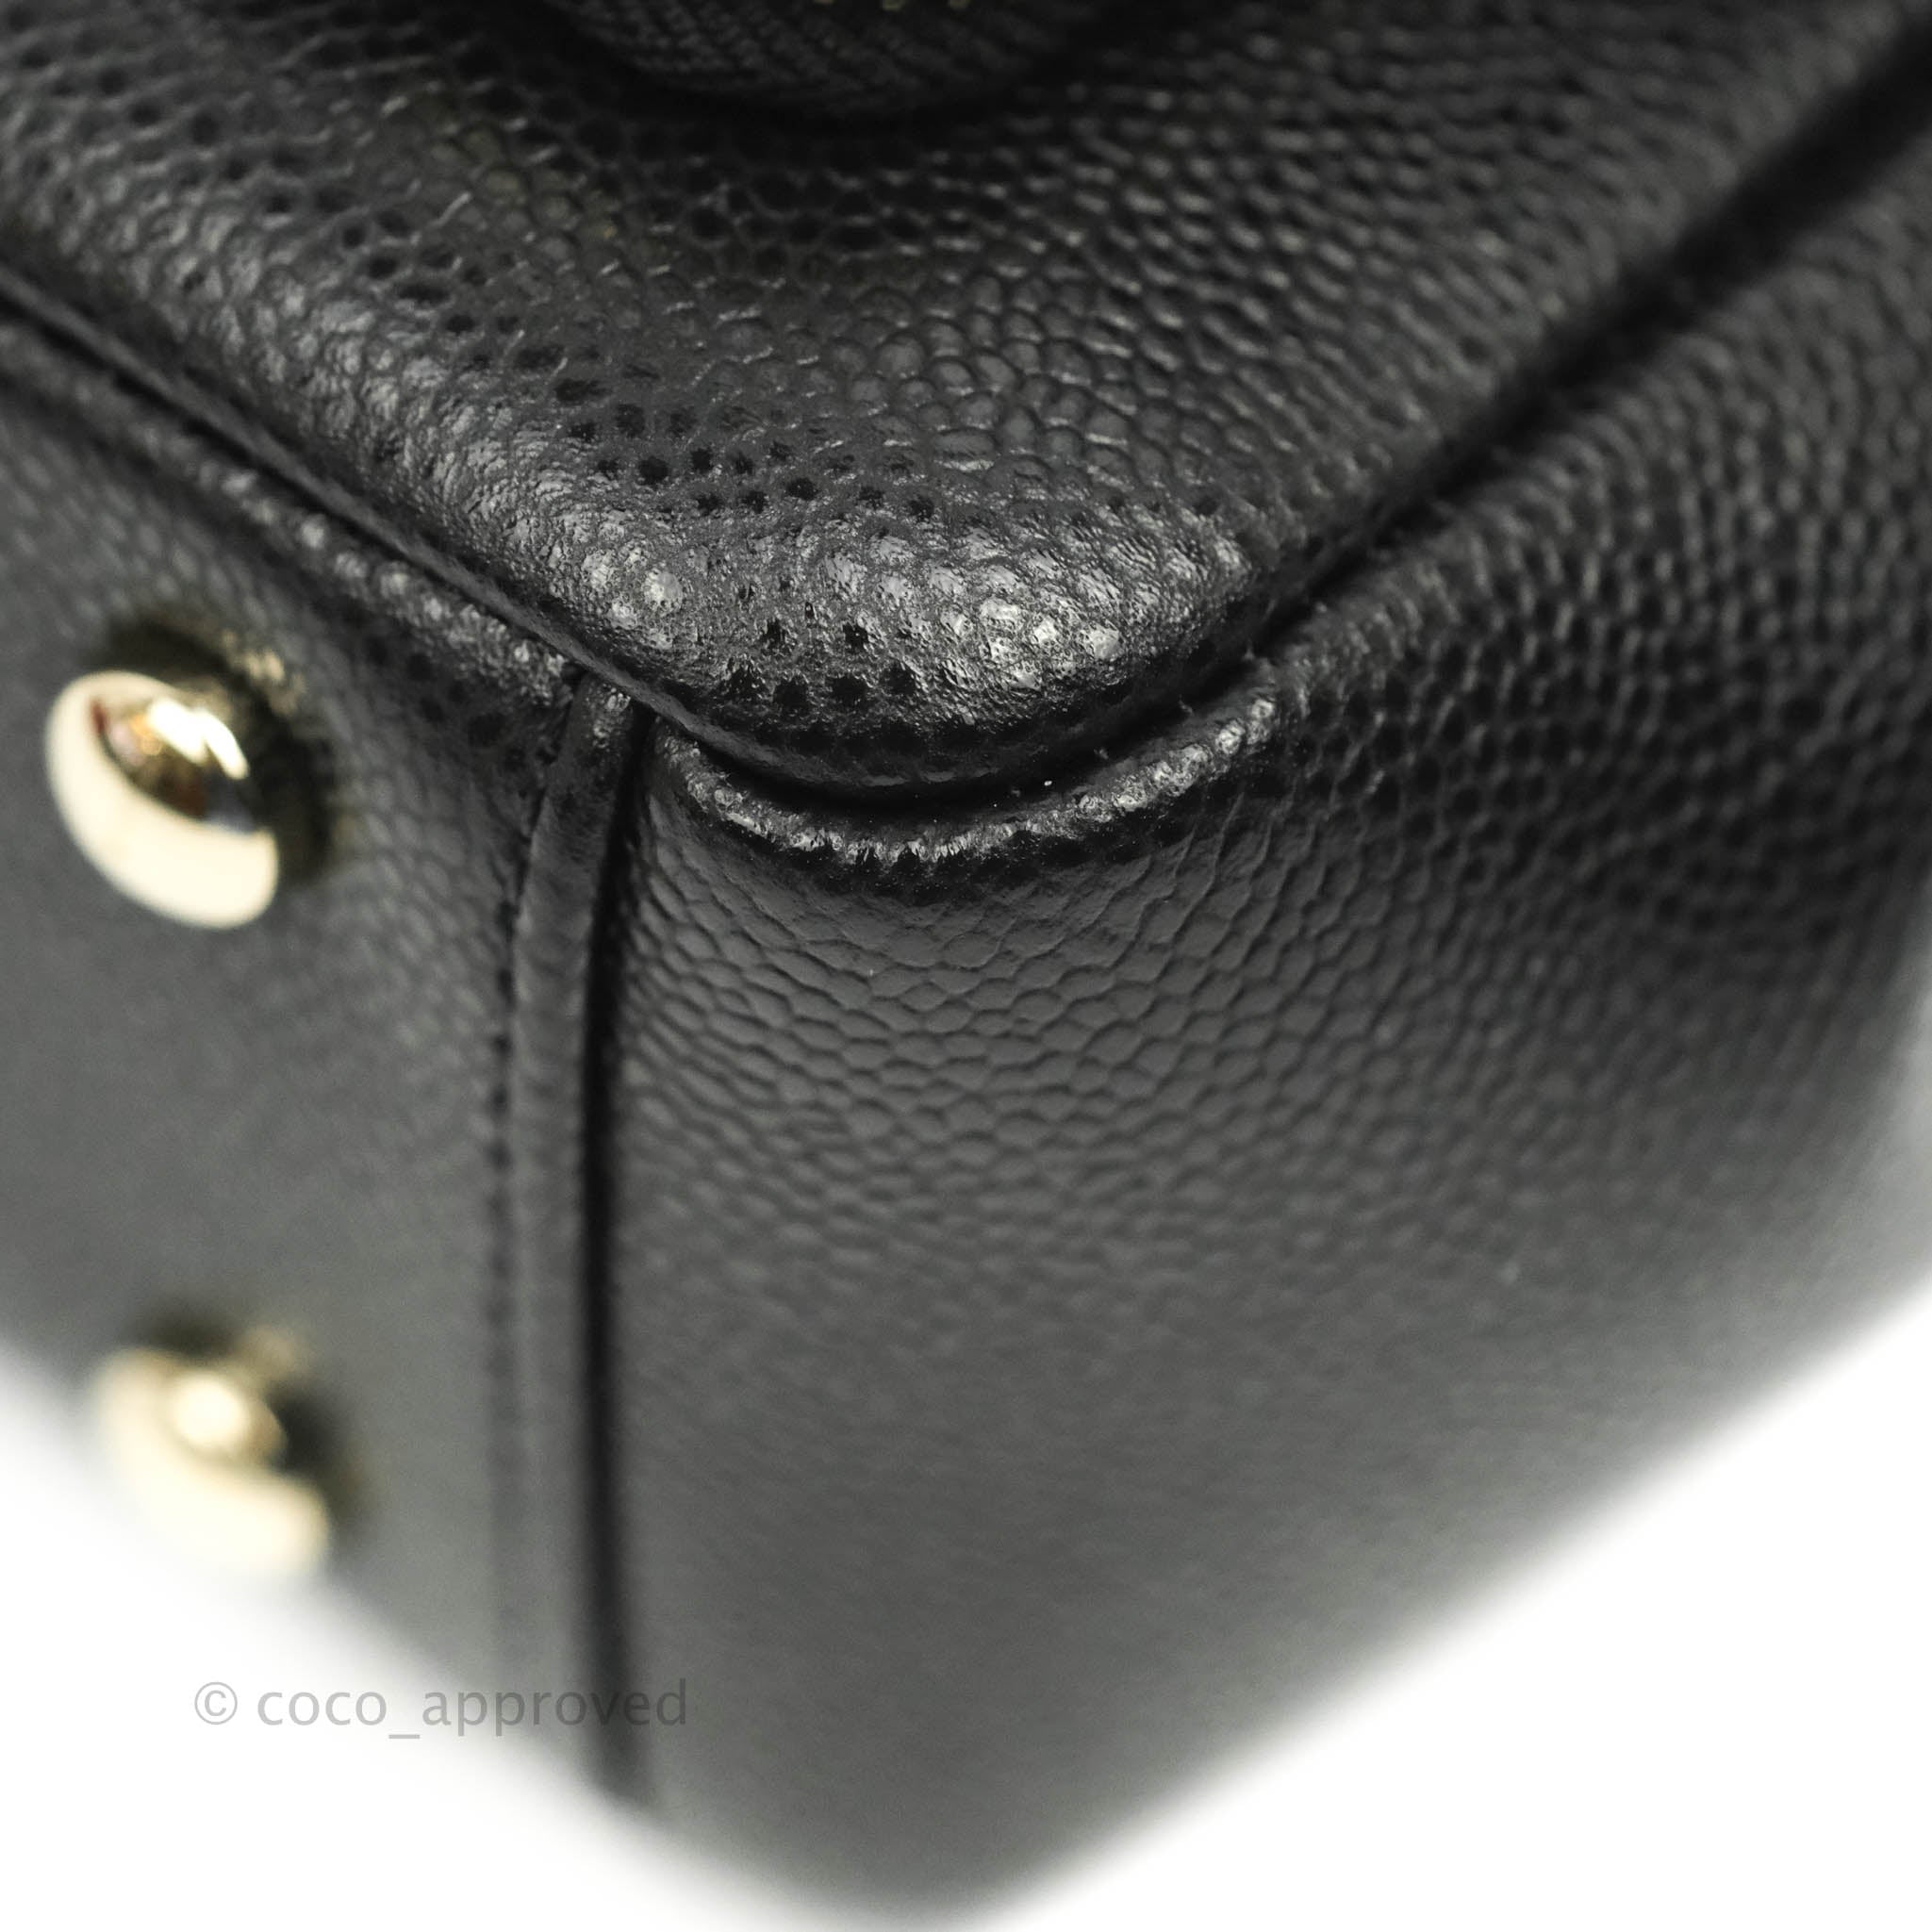 Chanel Affinity Flap Bag Size : - My Grande Shoppes 英国代购